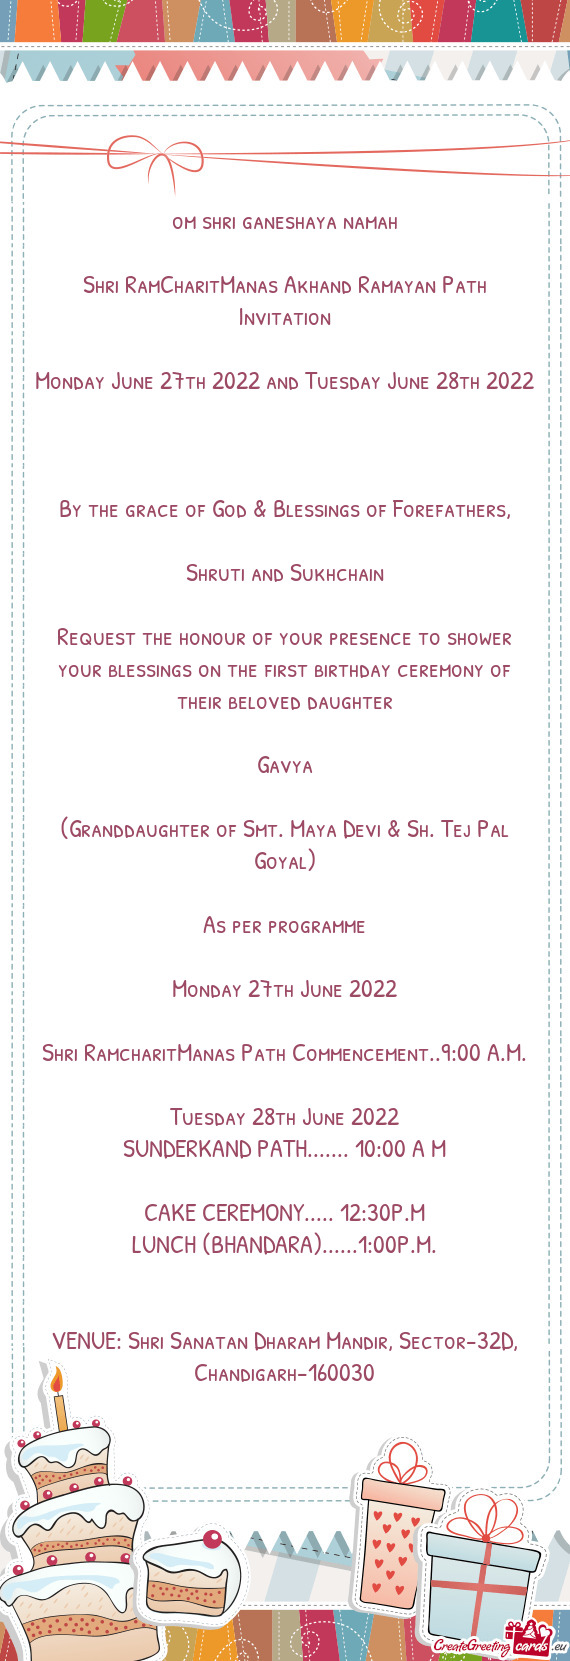 (Granddaughter of Smt. Maya Devi & Sh. Tej Pal Goyal)